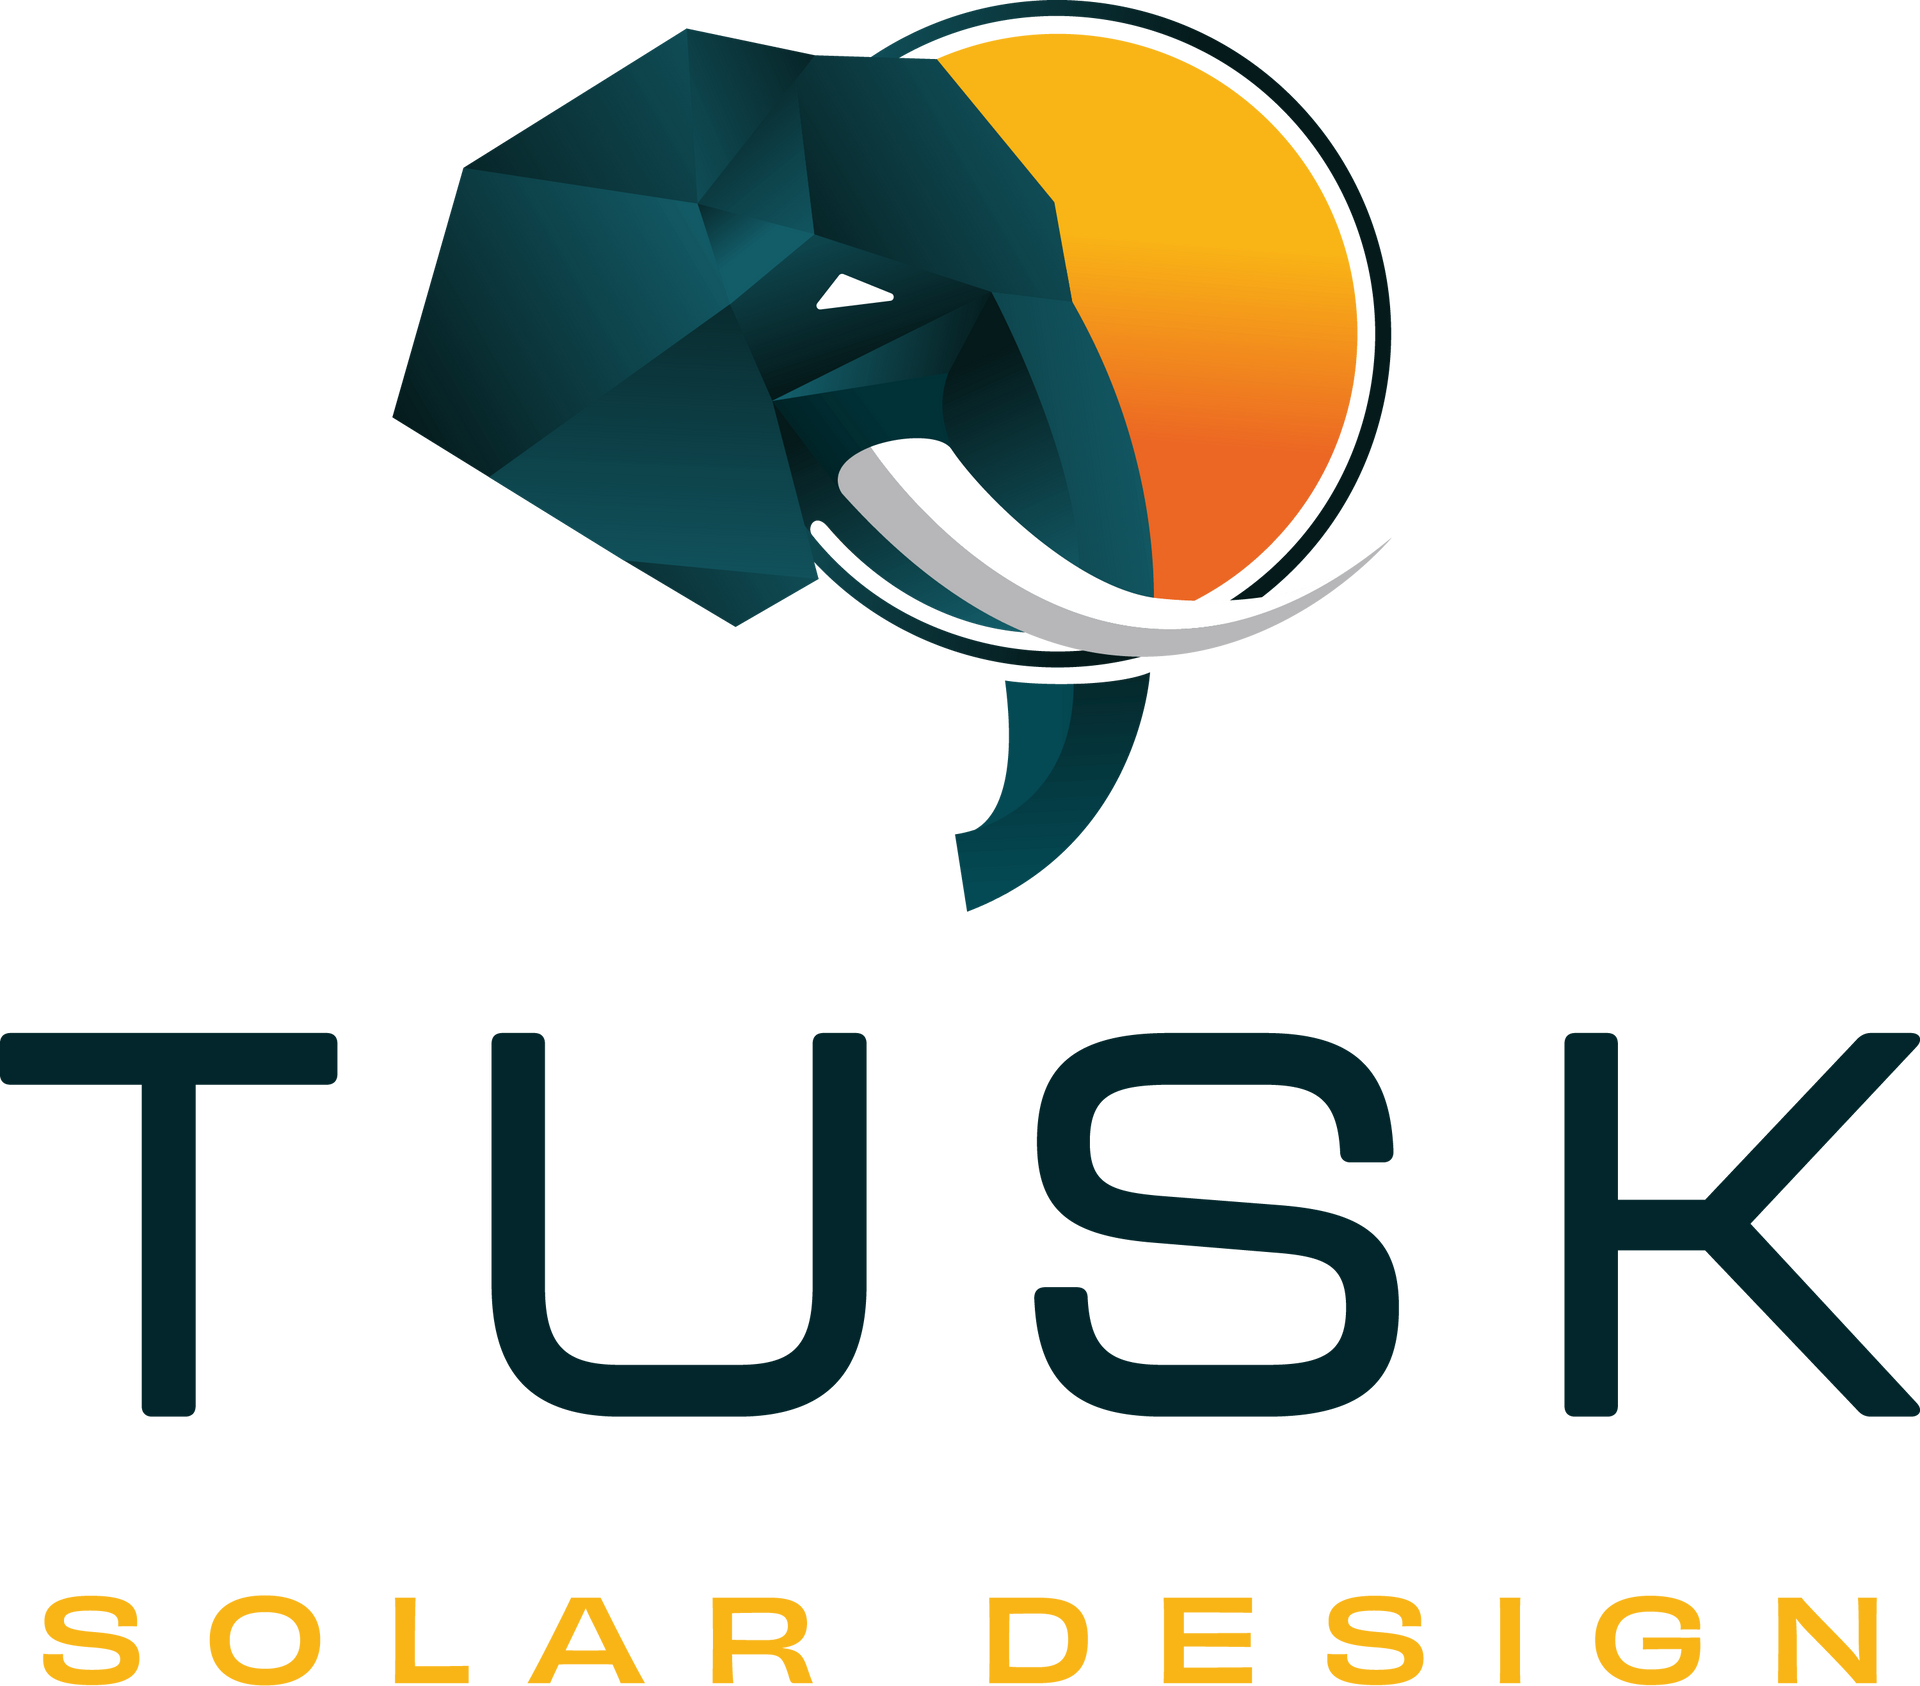 A logo for tusk solar design with an elephant on it